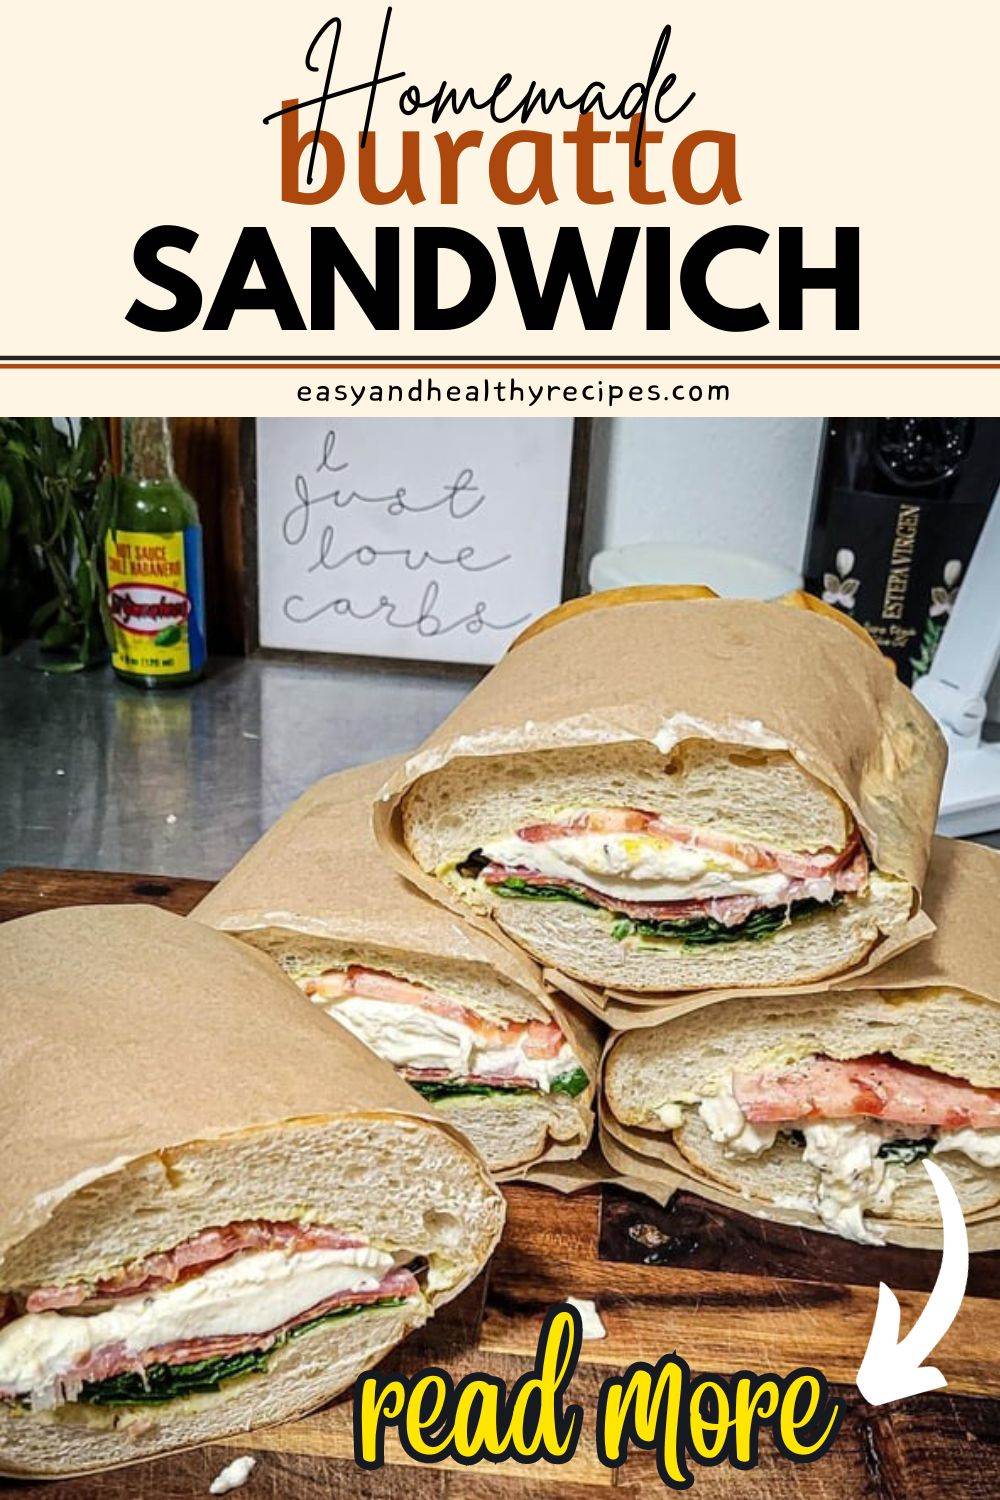 Burrata Sandwich